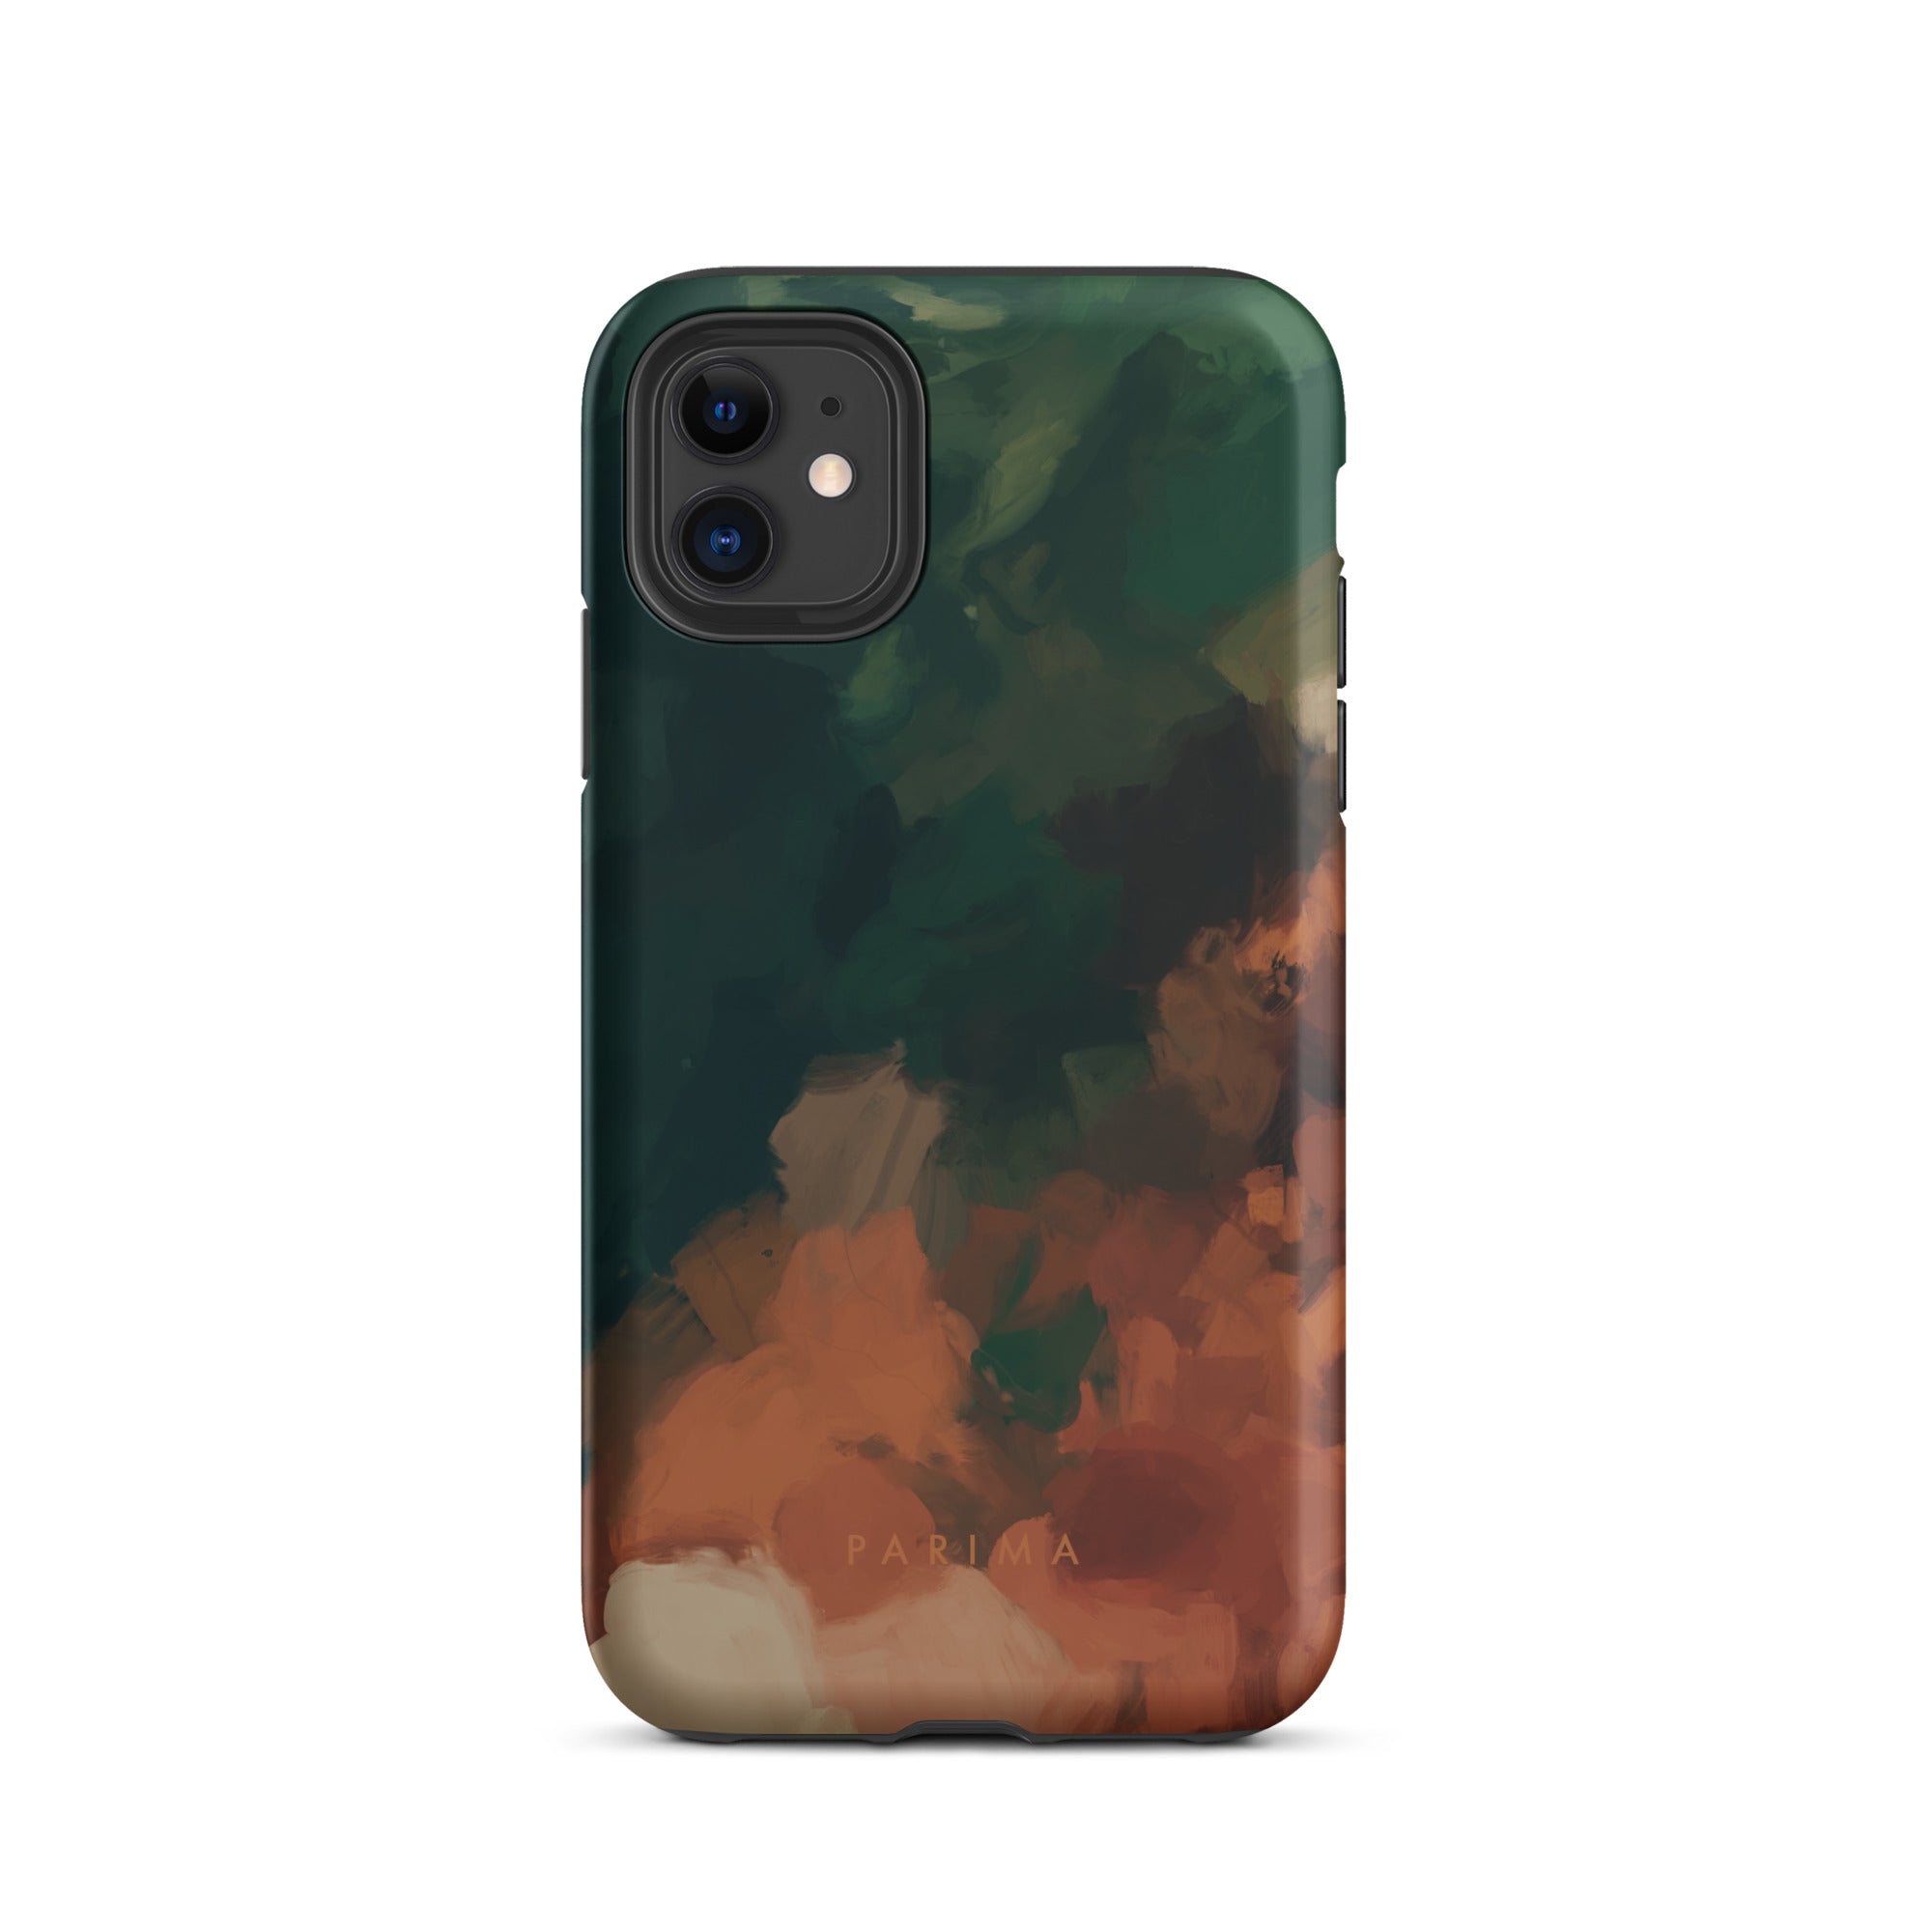 Cedar, green and brown abstract art - iPhone 11 tough case by Parima Studio